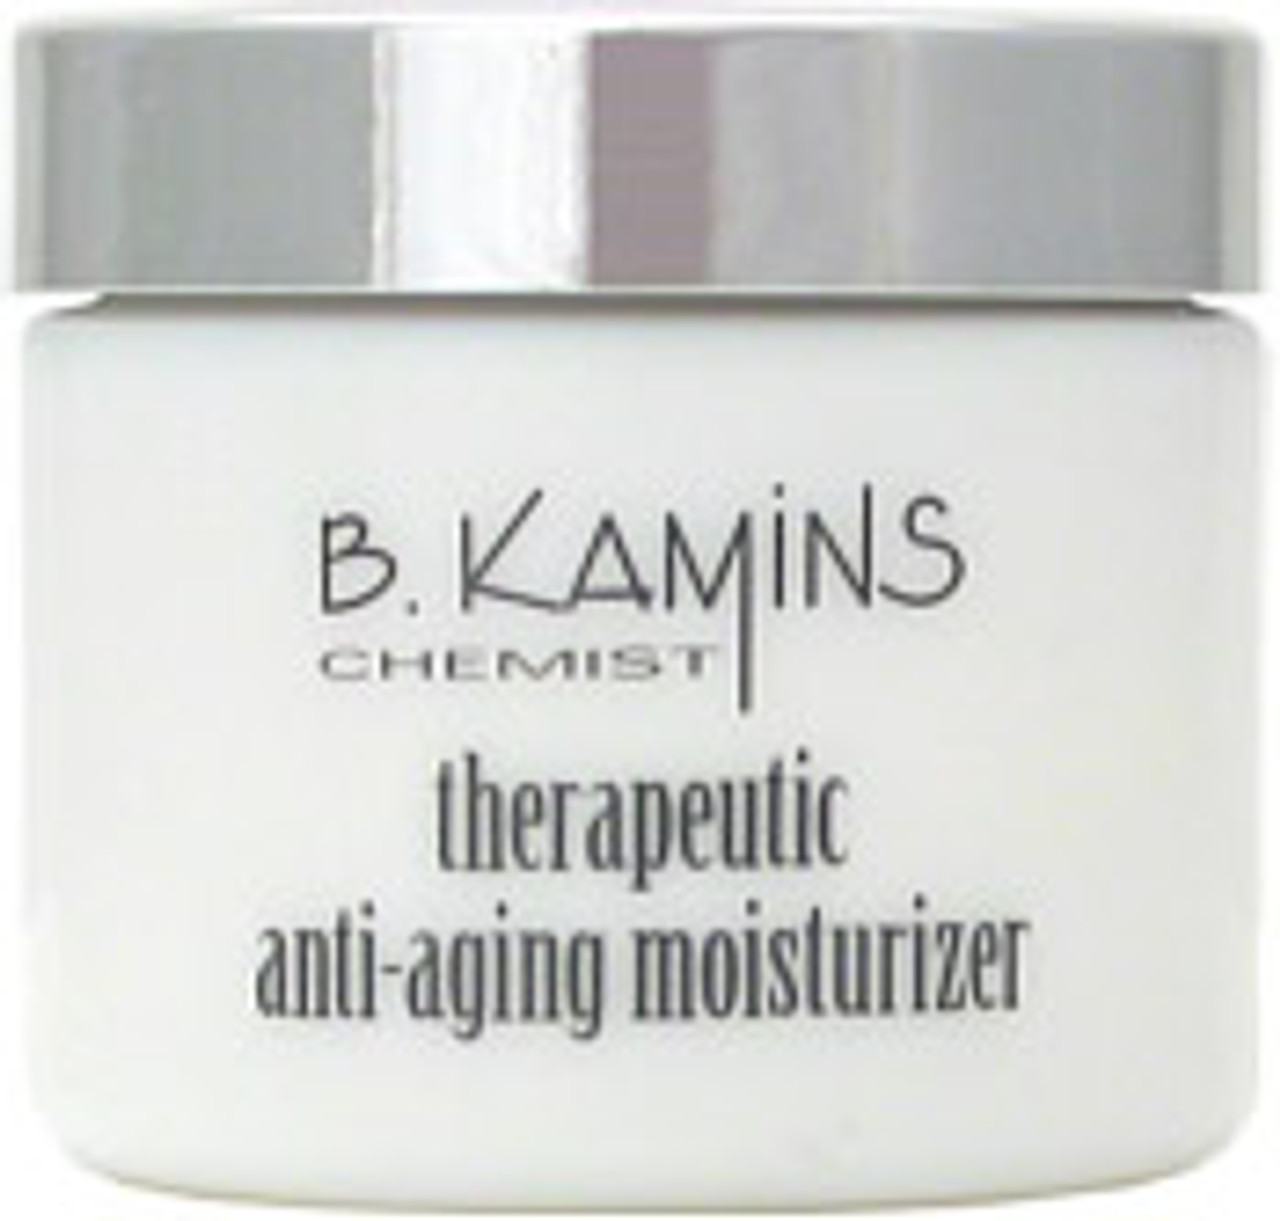 B. Kamins Therapeutic Anti-Aging Moisturizer, 2.2 oz